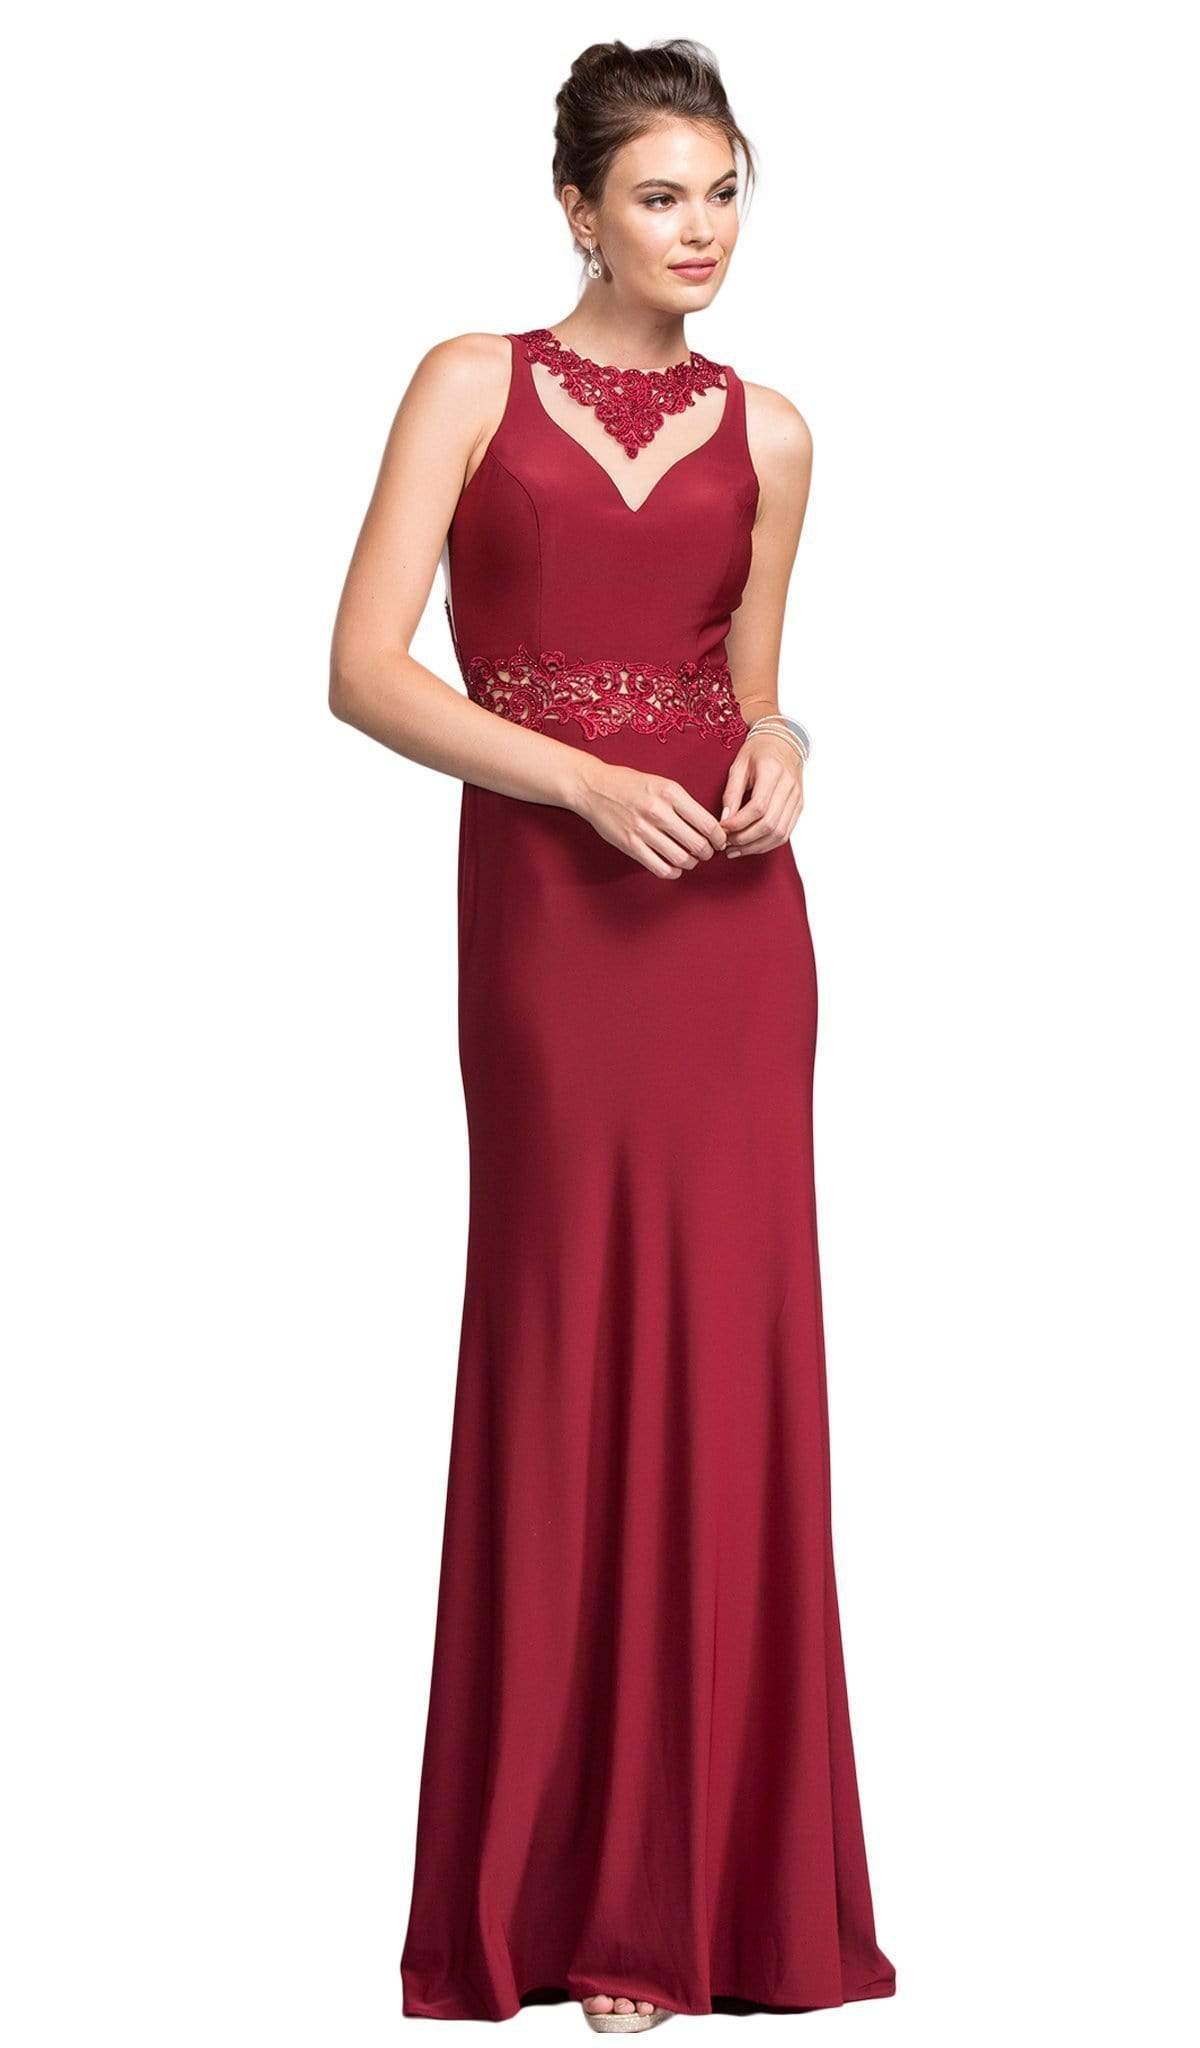 Aspeed Design - Bedazzled Jewel Neck Sheath Prom Dress
